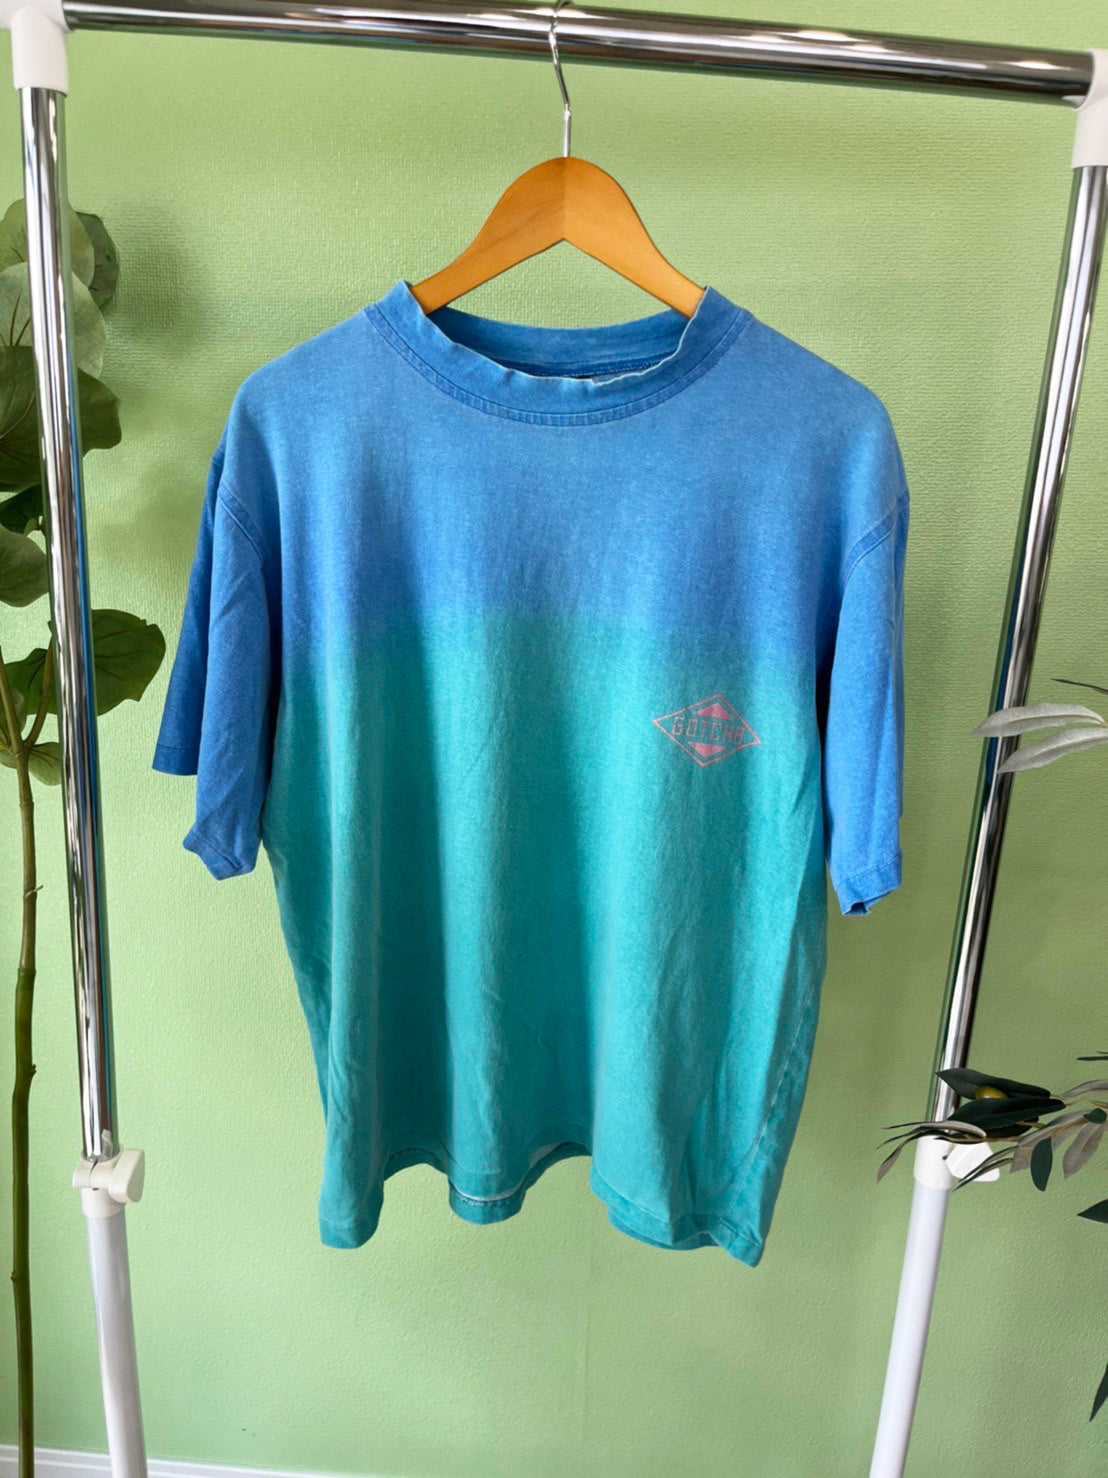 【GOTCHA】90's vintage surf  gotcha rare tie dye t-shirt made in USA (men's M)